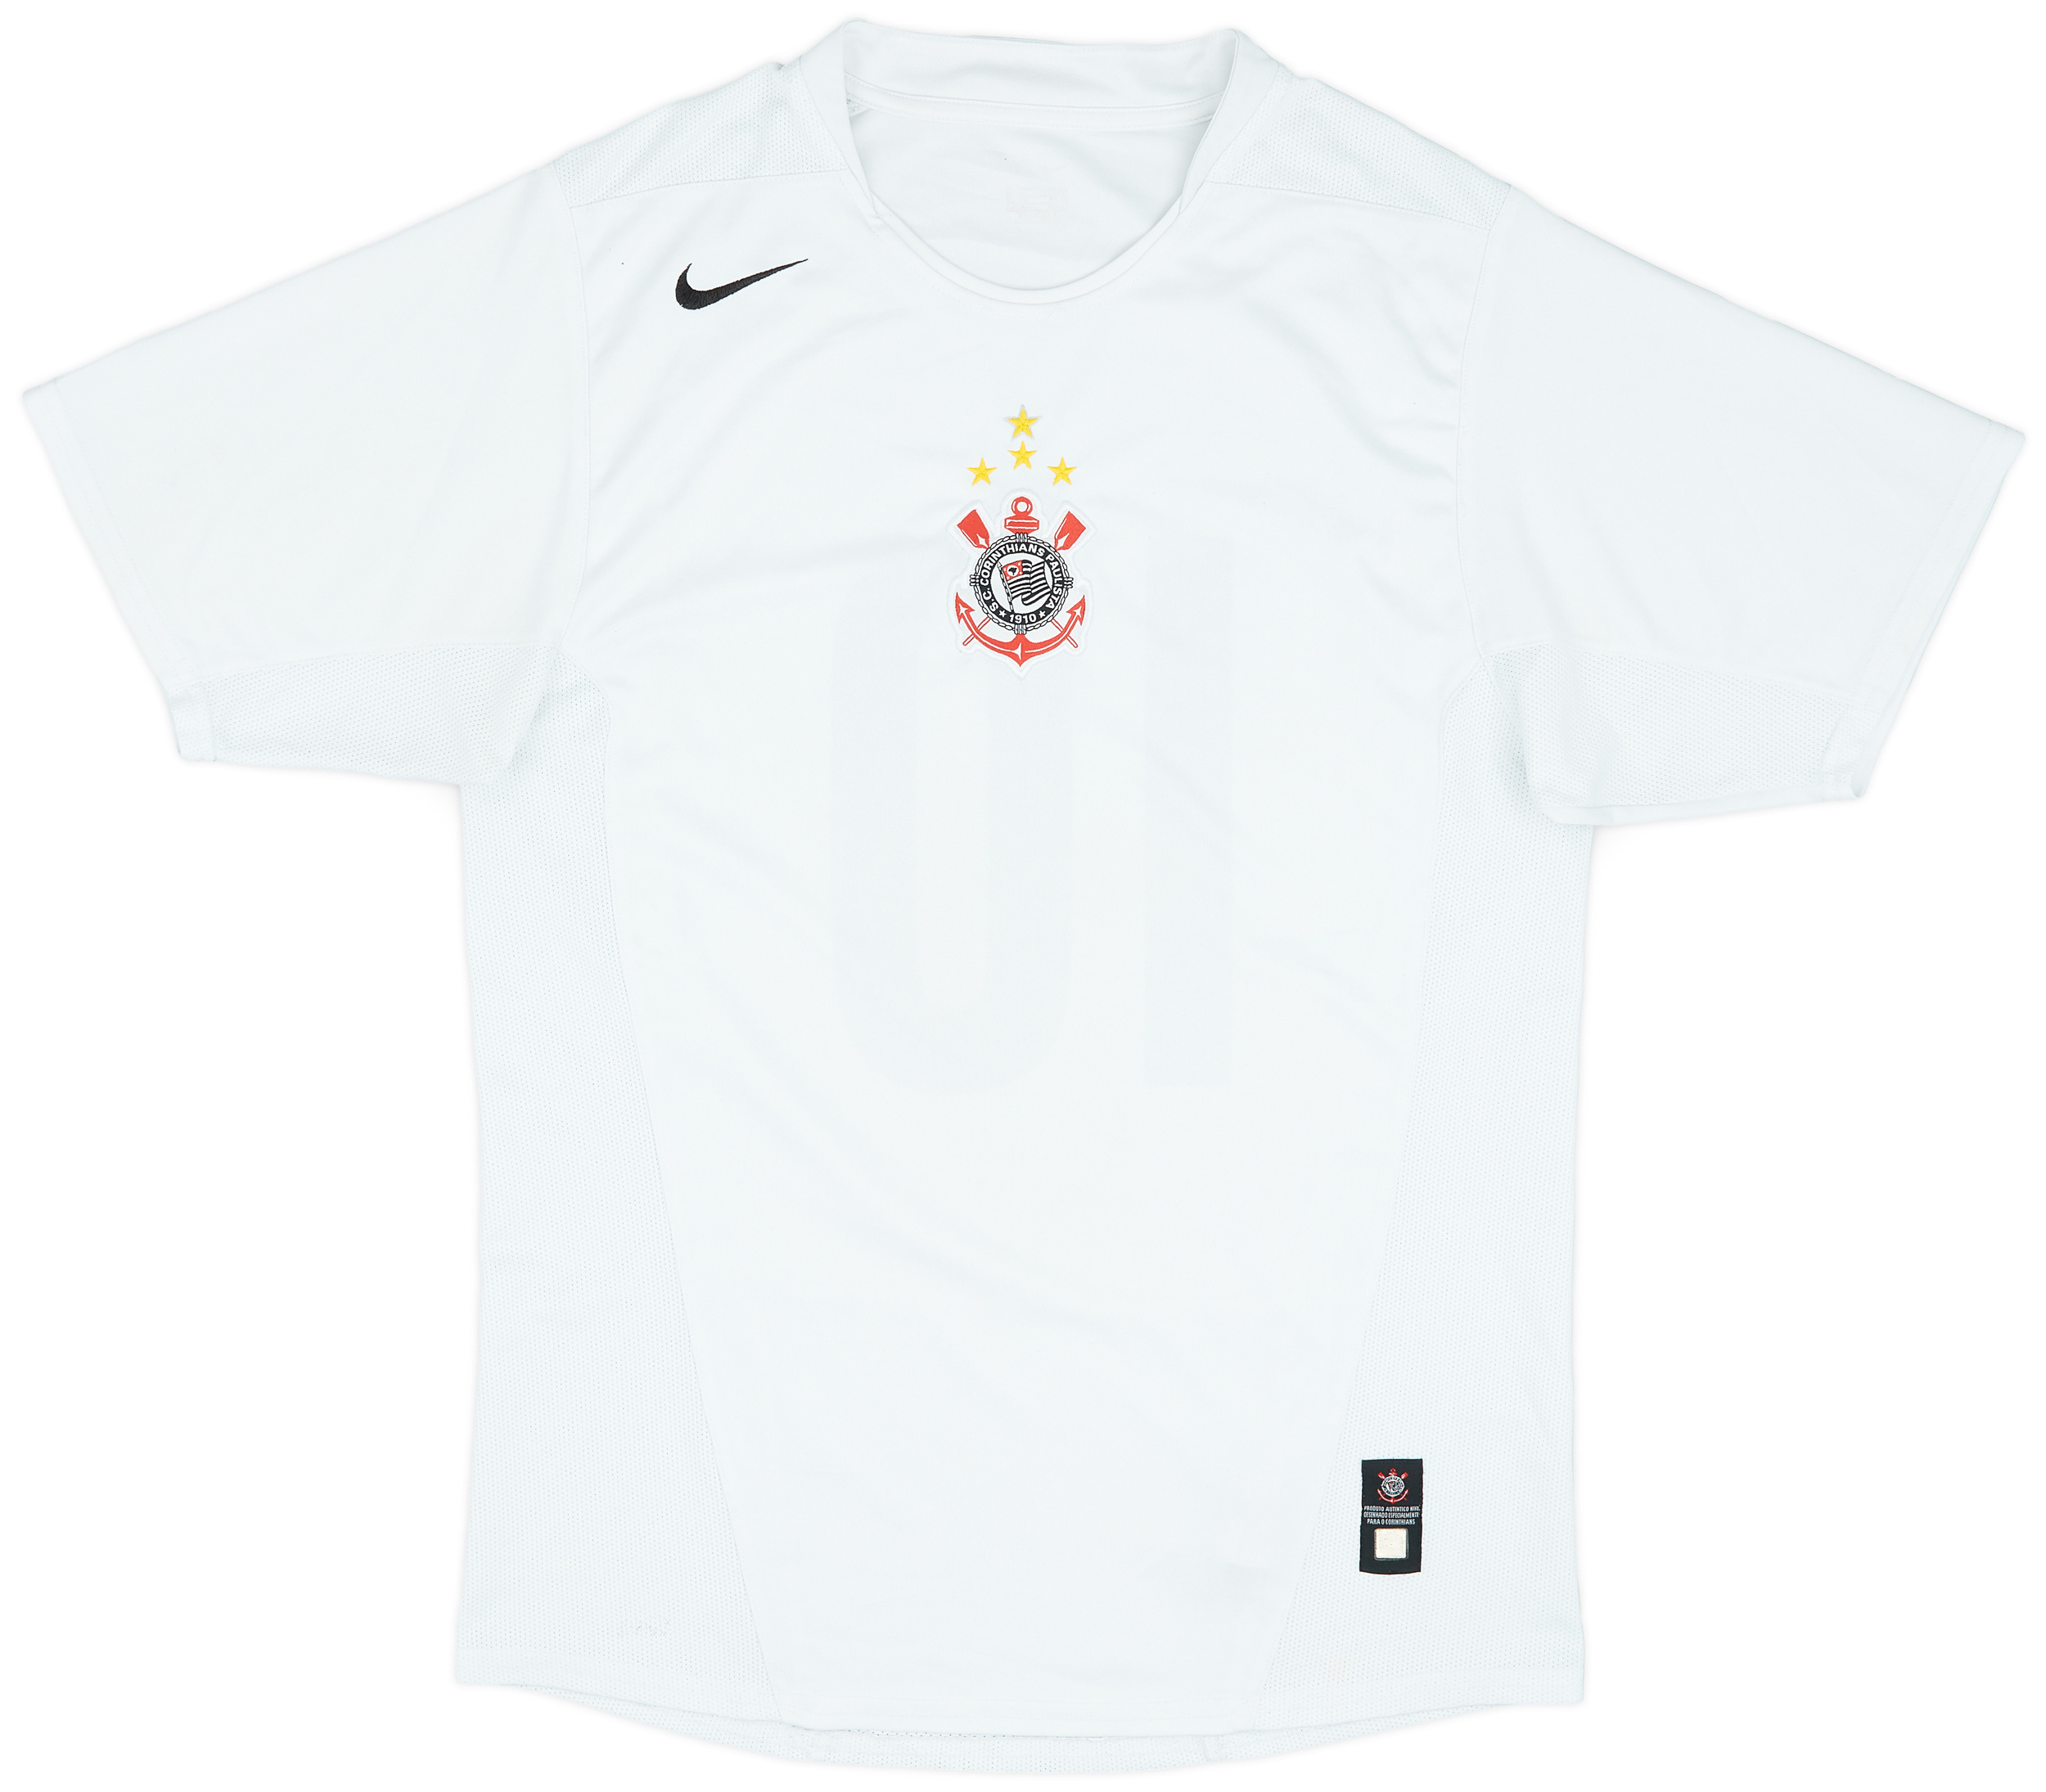 2004-05 Corinthians Home Shirt #10 (Tevez) - 7/10 - ()